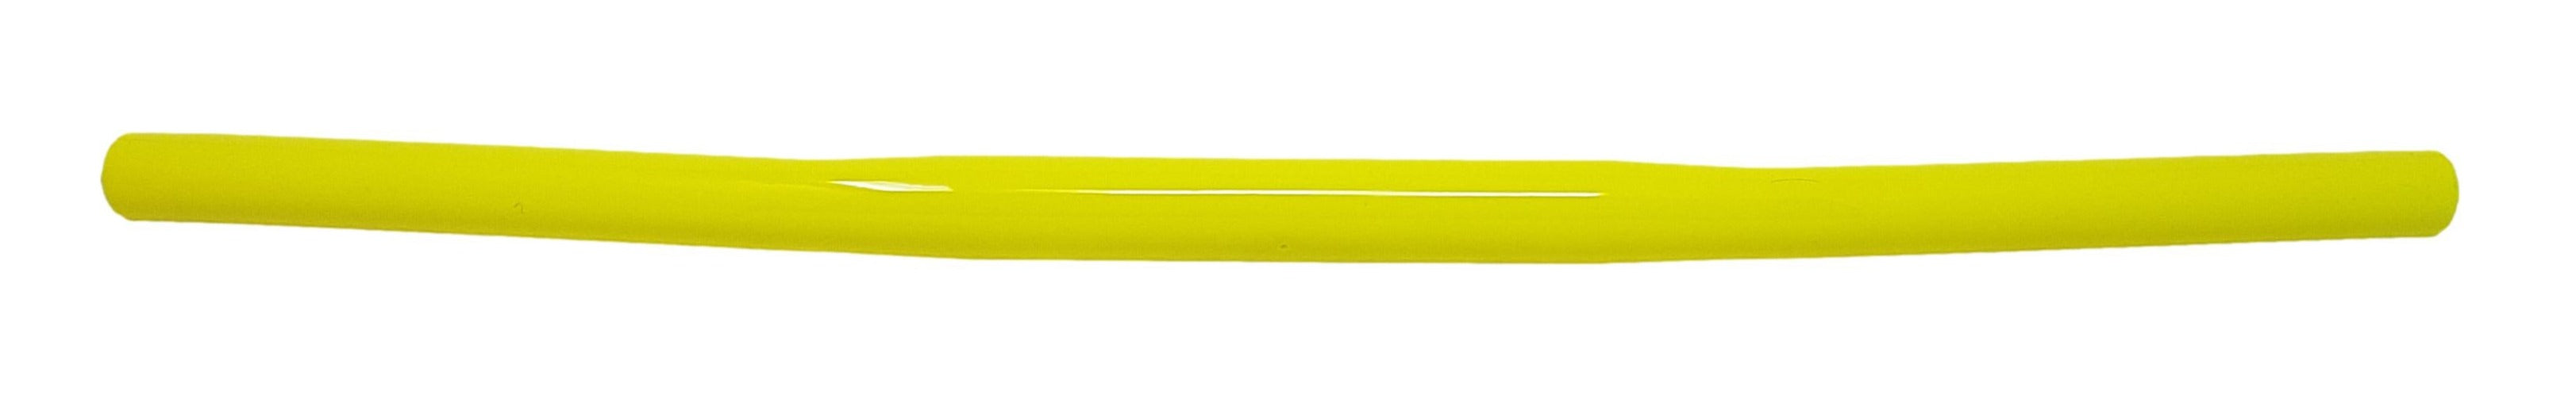 580mm Tapered MTB Fixie Bike Bars Handlebar Neon Yellow Paint Finish Massive Discount